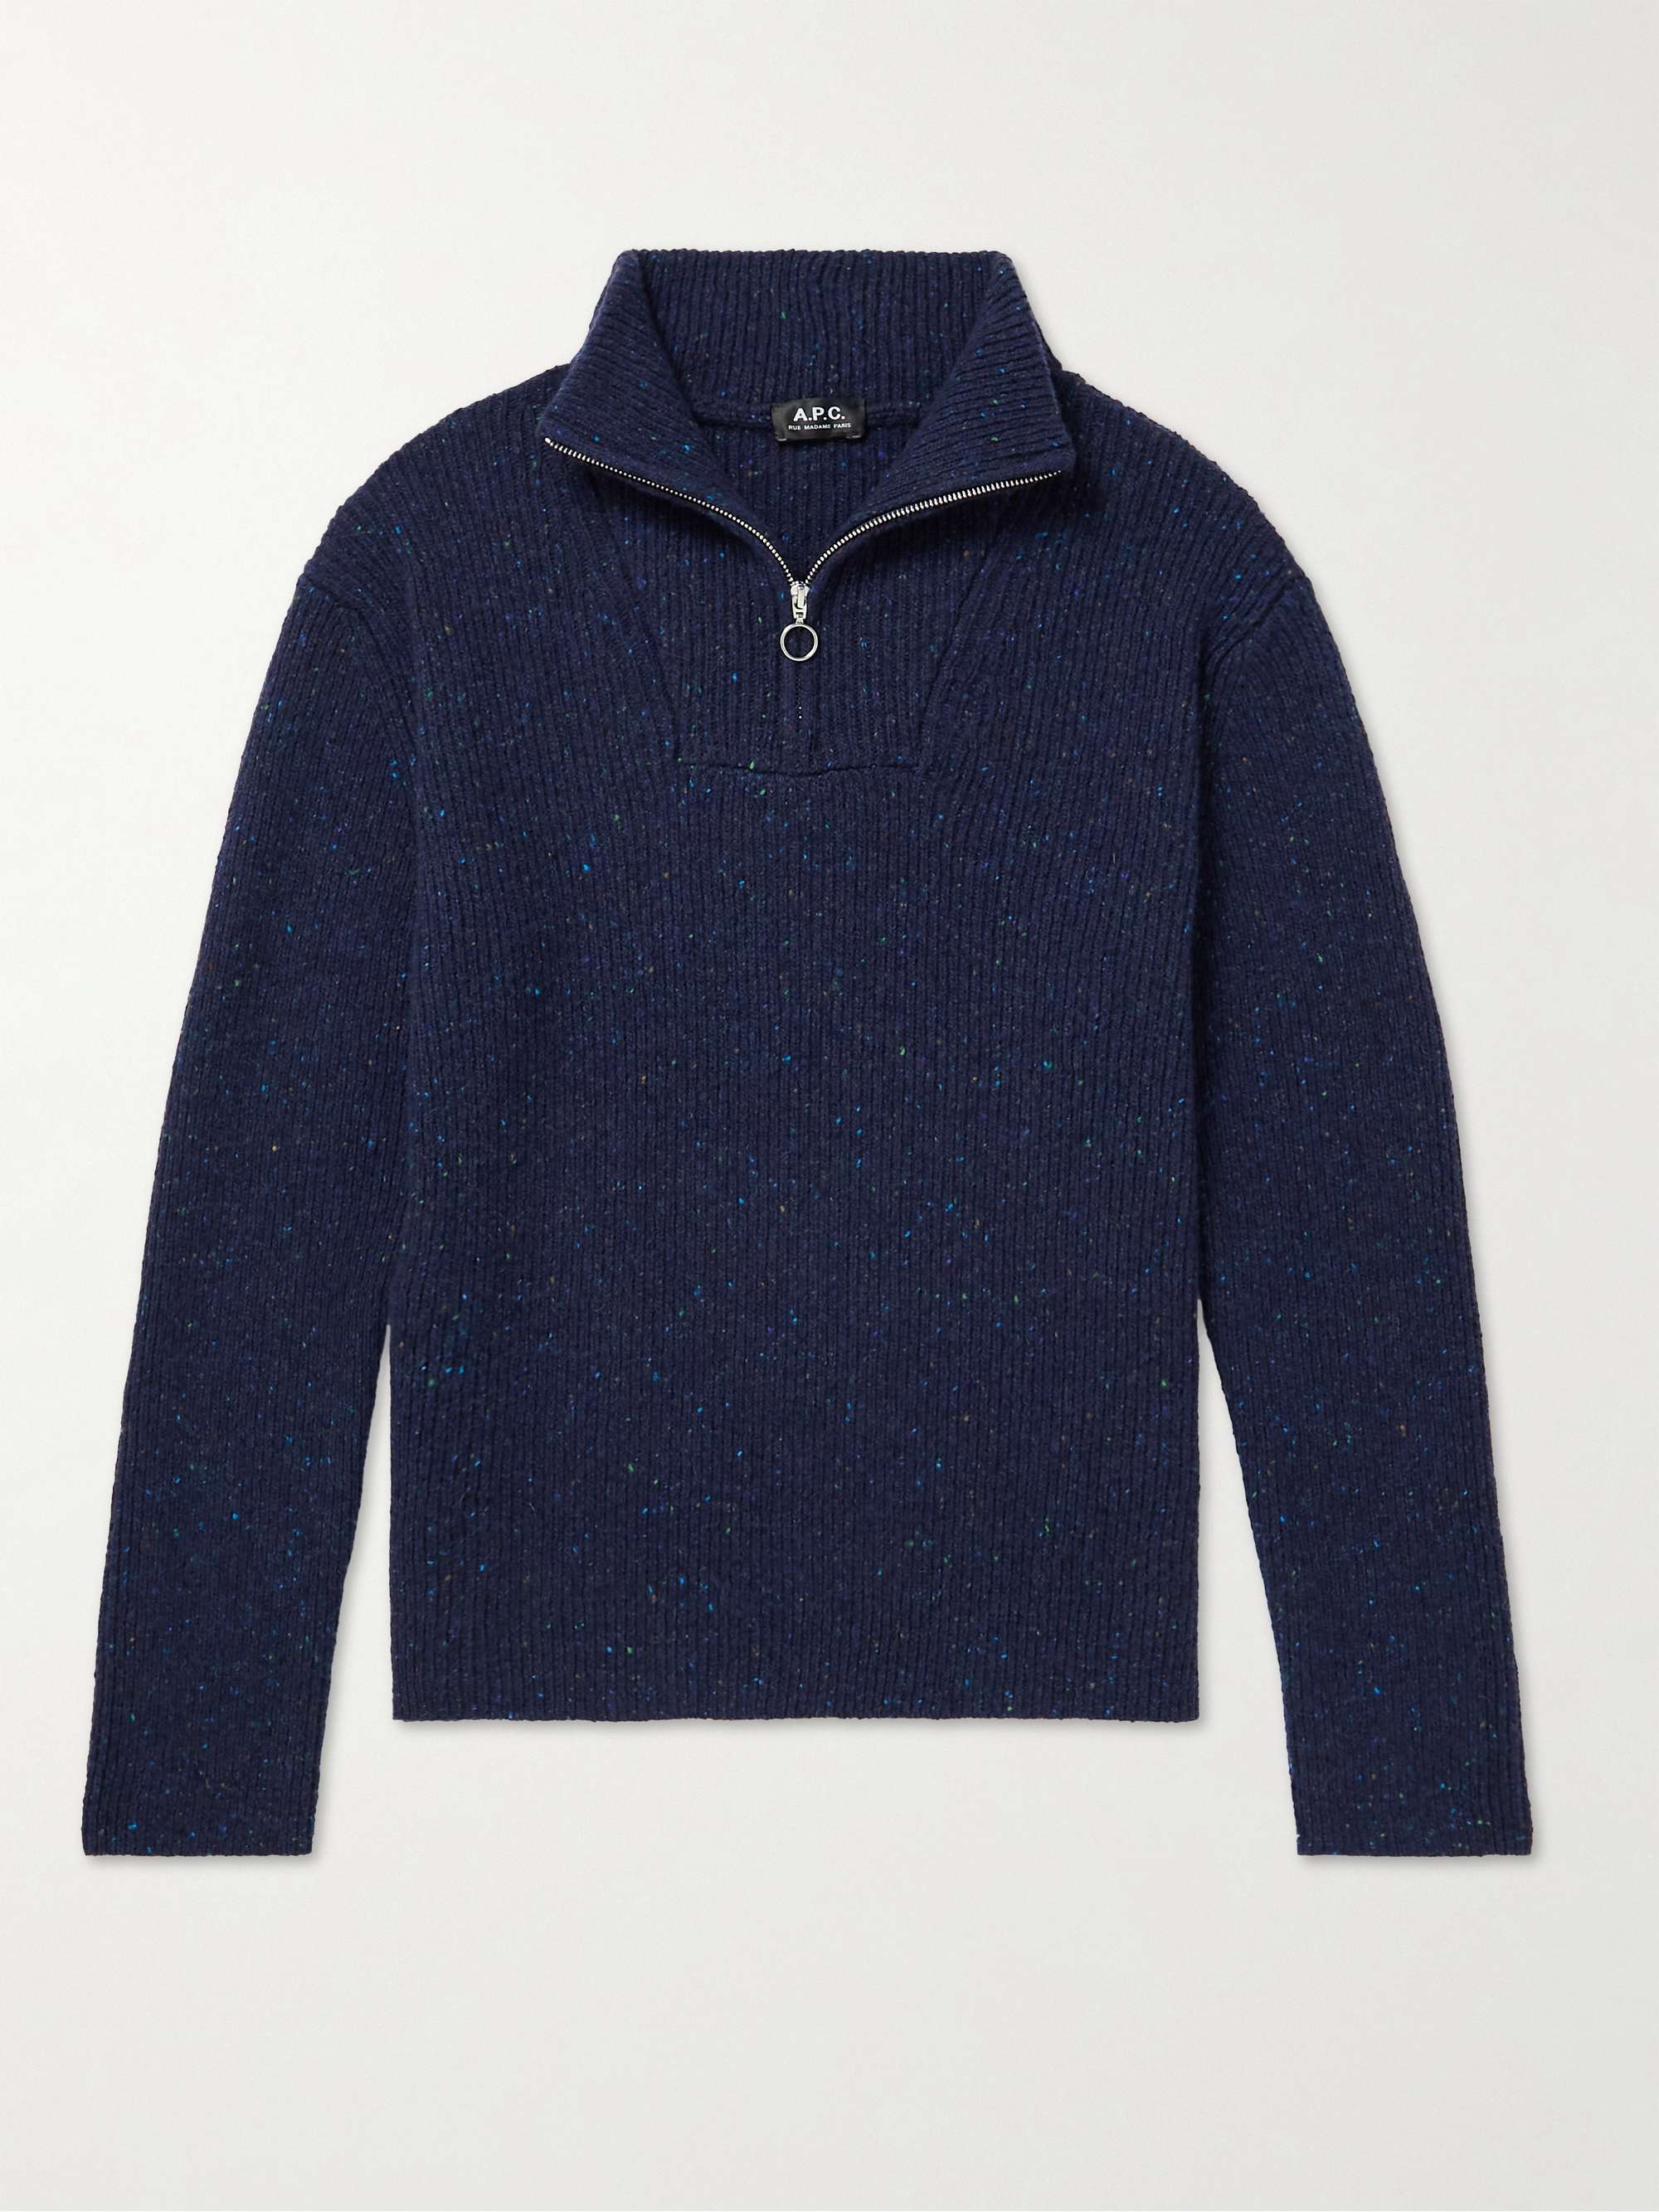 A.P.C. Bing Ribbed Wool-Blend Half-Zip Sweater for Men | MR PORTER